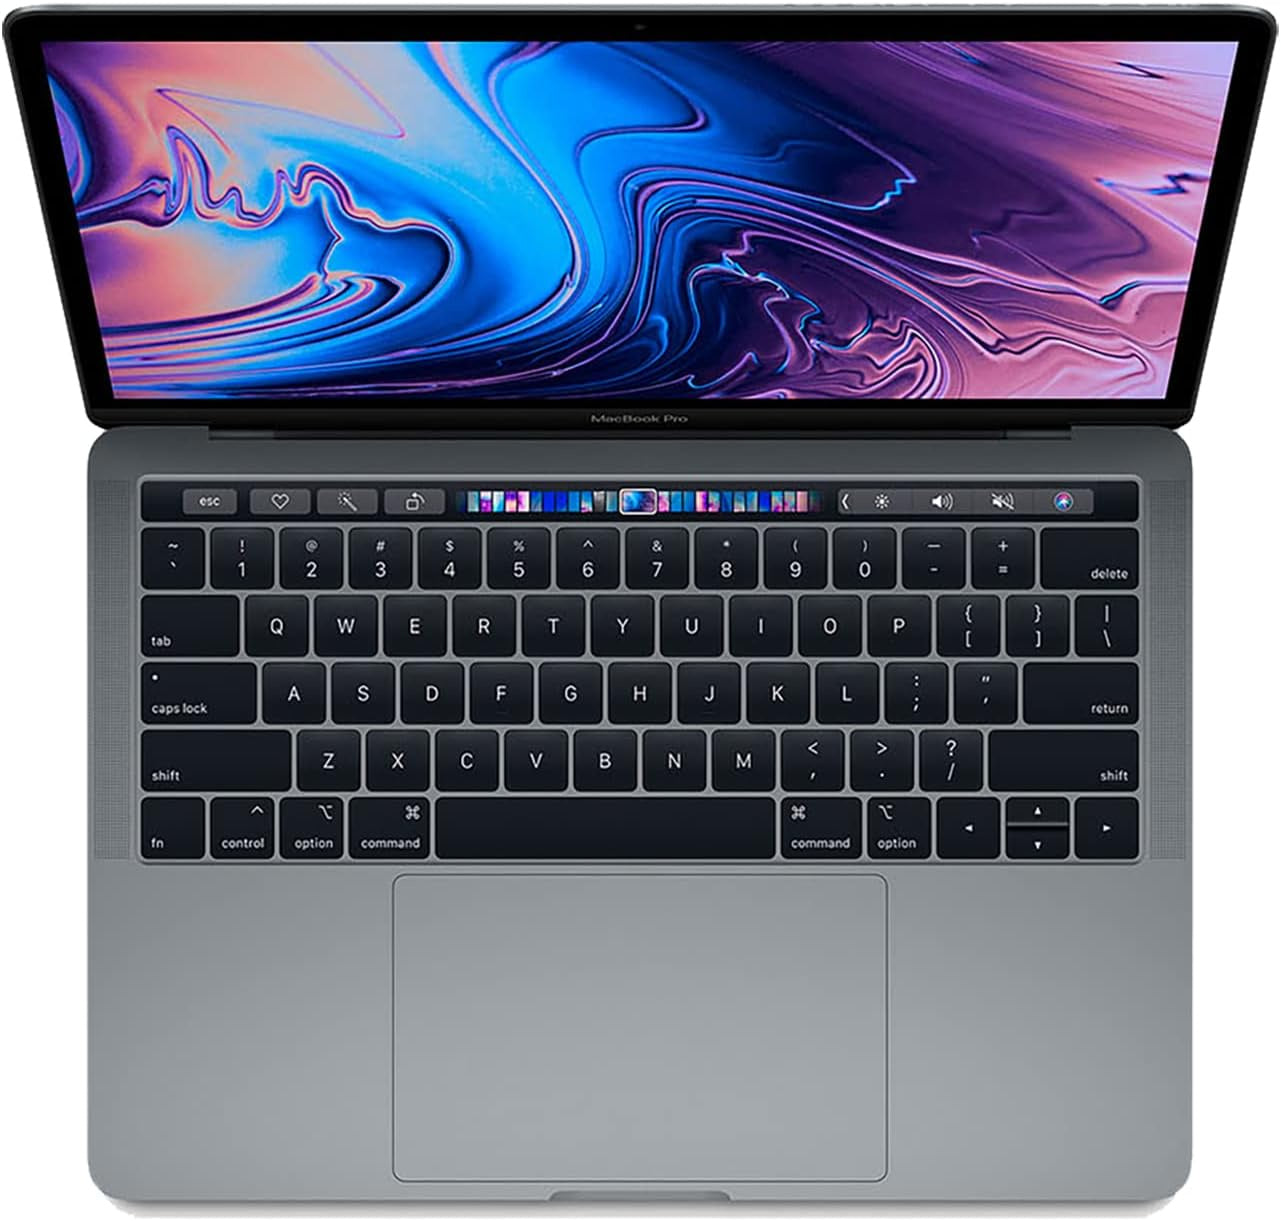 Apple - MacBook Pro (13-inch, 2019, Four Thunderbolt 3 ports) | Intel Core i7 / 8GB RAM / 256GB SSD